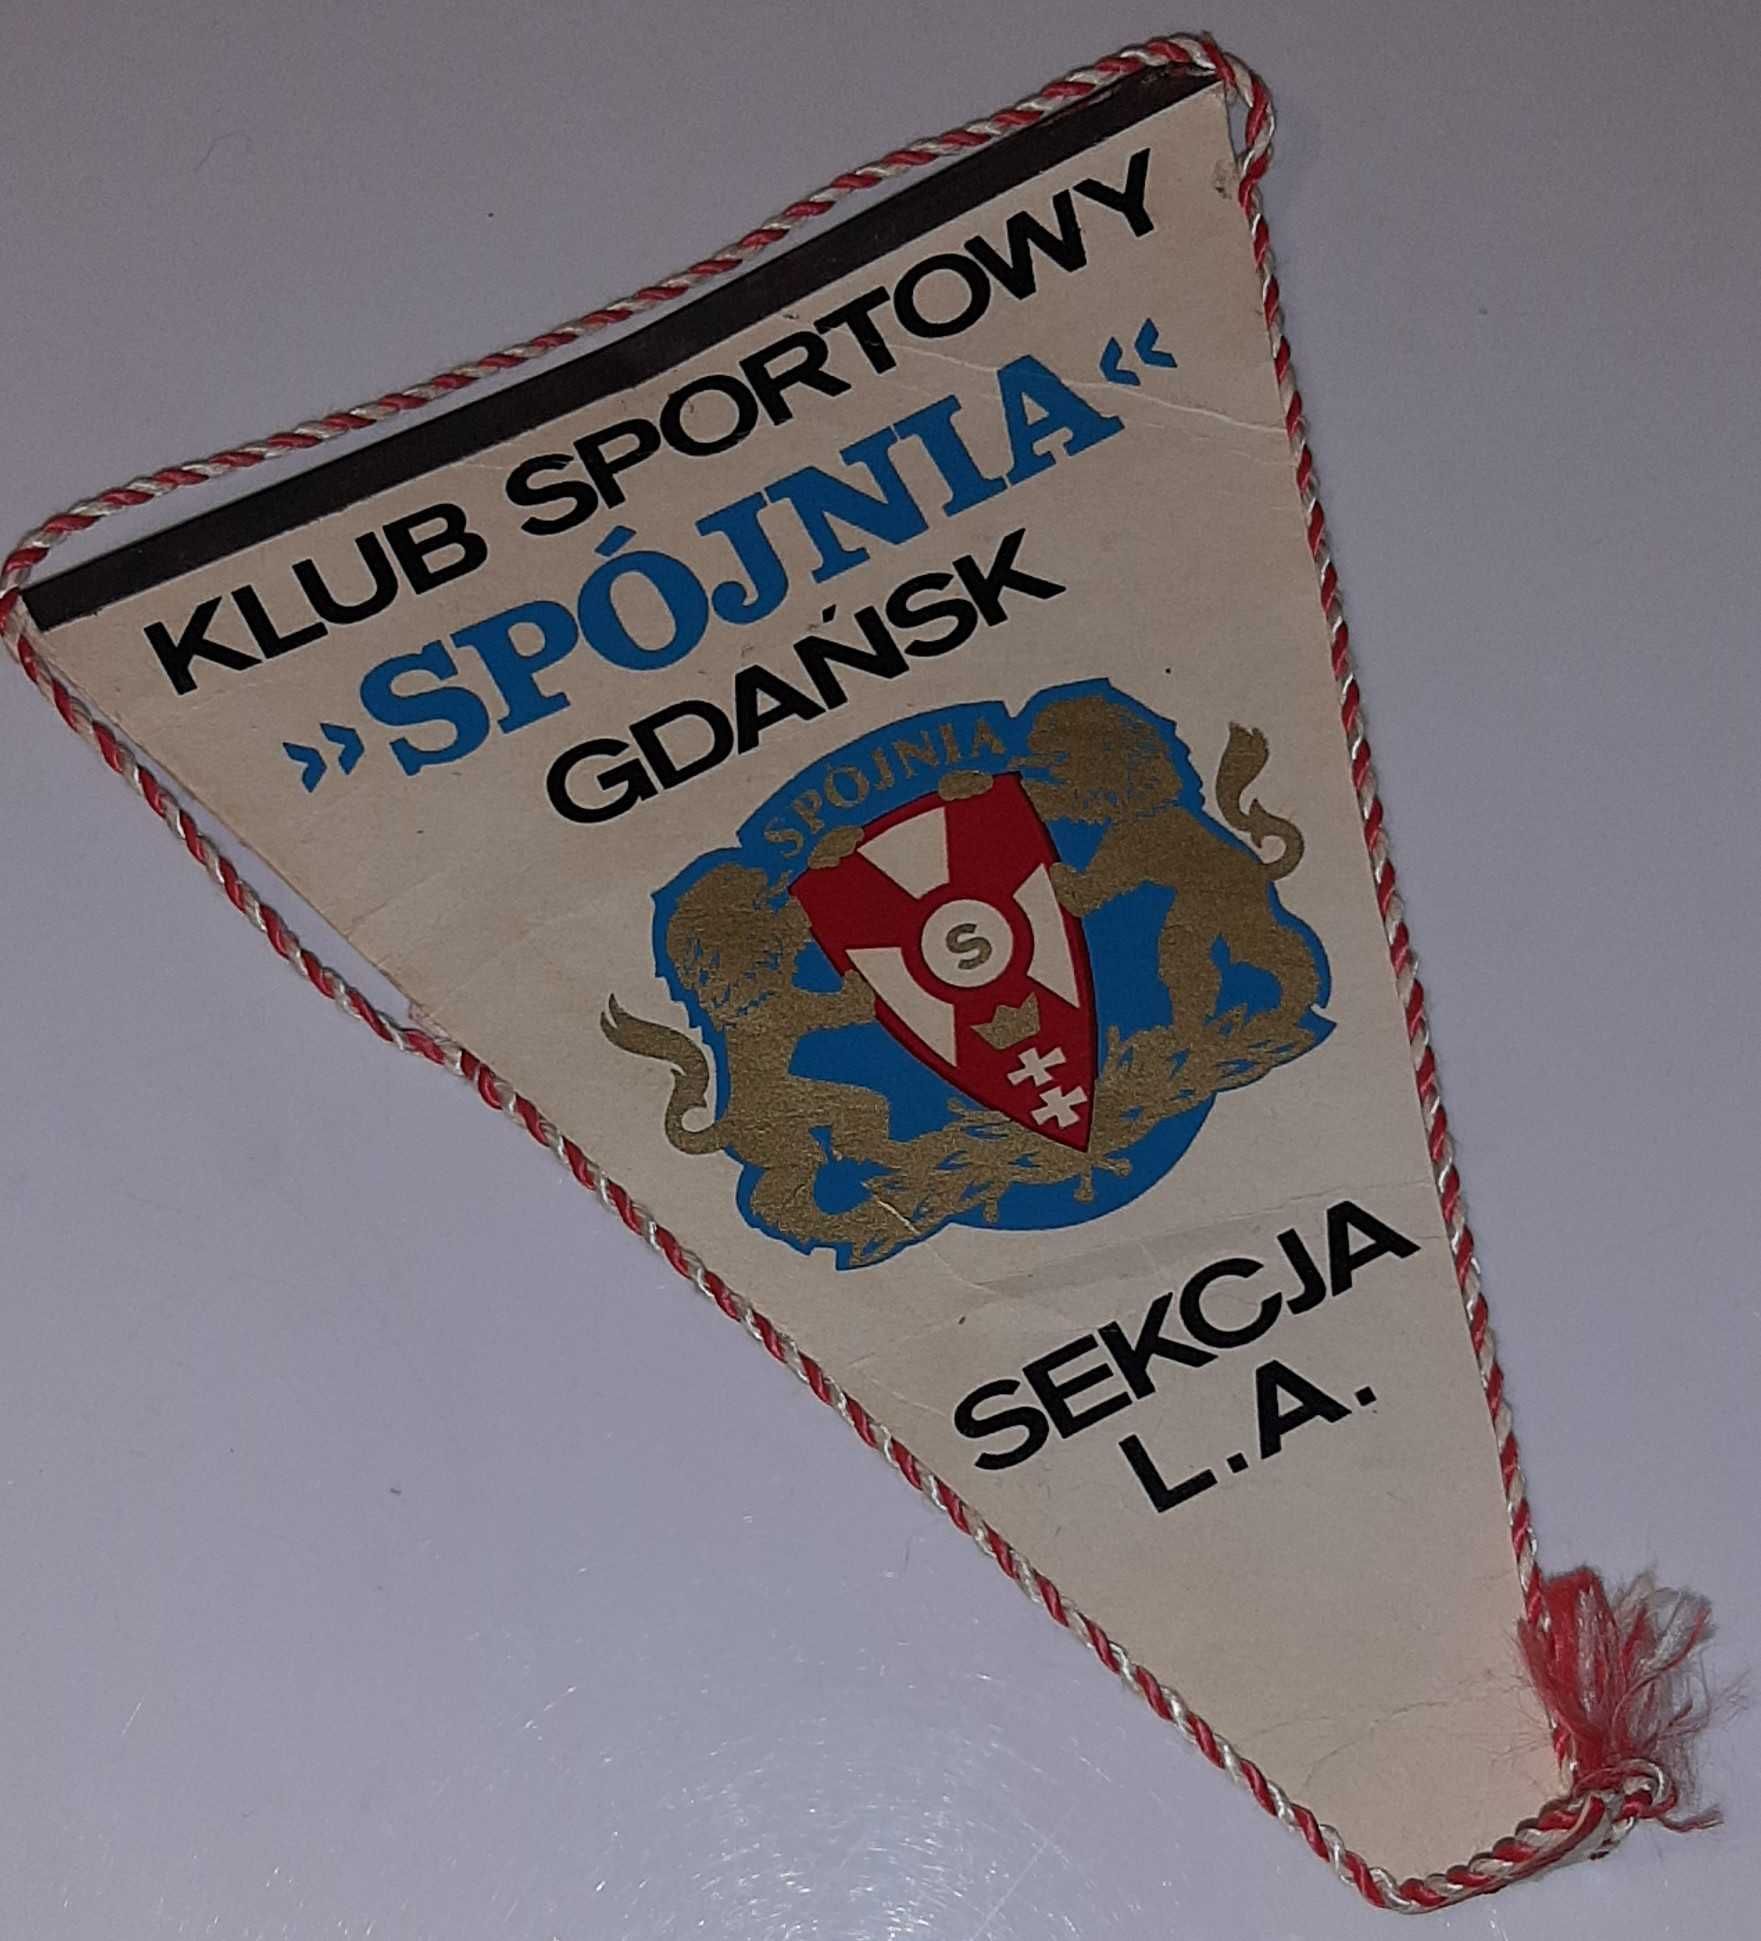 Proporczyk KS Spójnia Gdańsk Sekcja L.A. Polska flaga